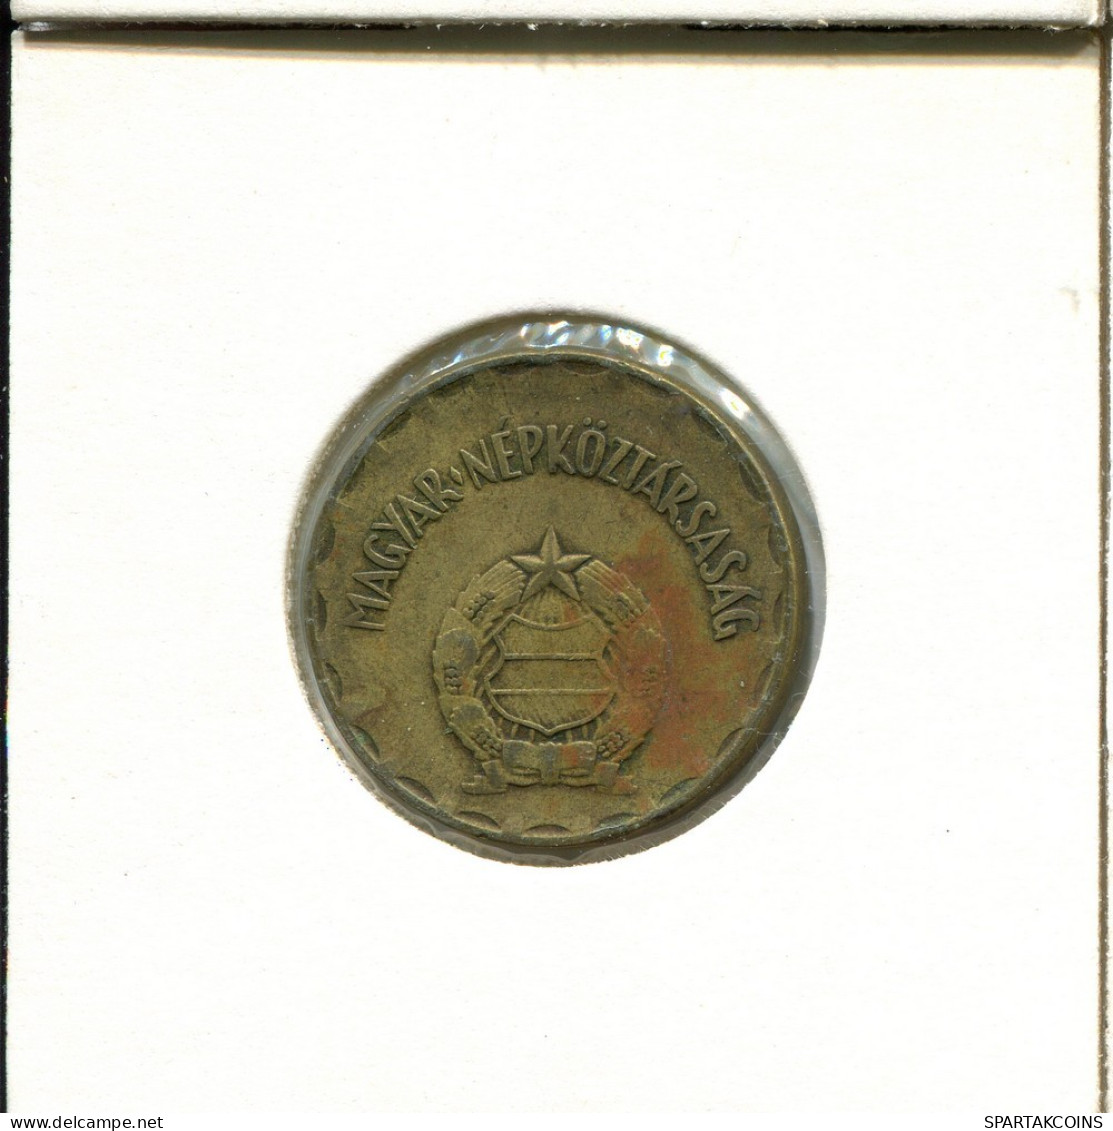 2 FORINT 1976 HUNGARY Coin #AS857.U.A - Hungary